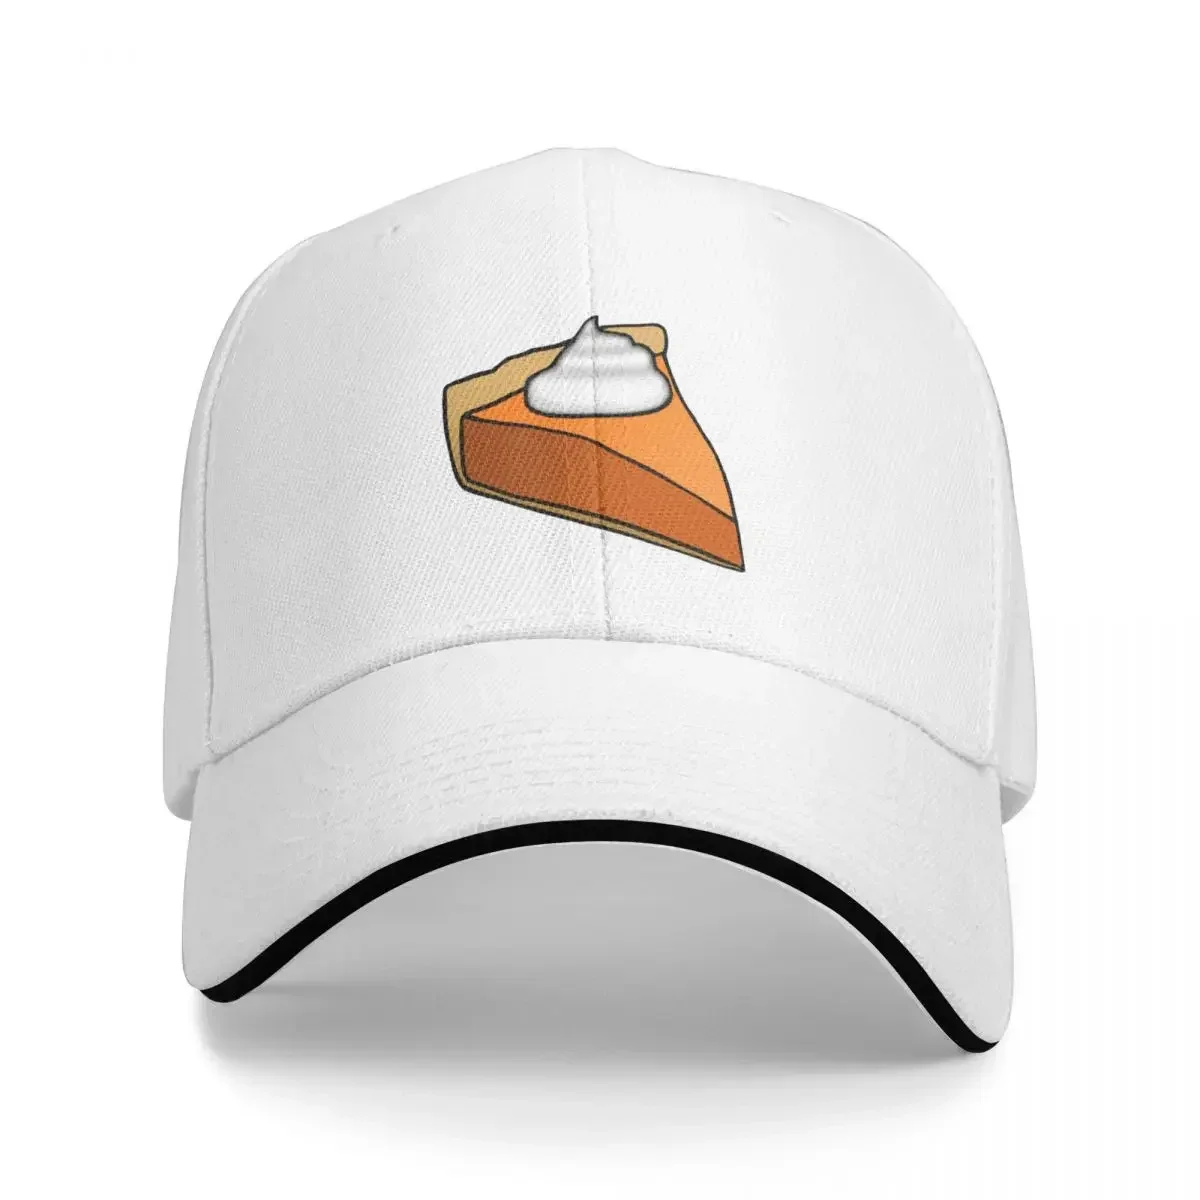 

Pumpkin Pie on Orange Gingham Plaid Cap Baseball Cap fur hat cosplay hats woman Men's